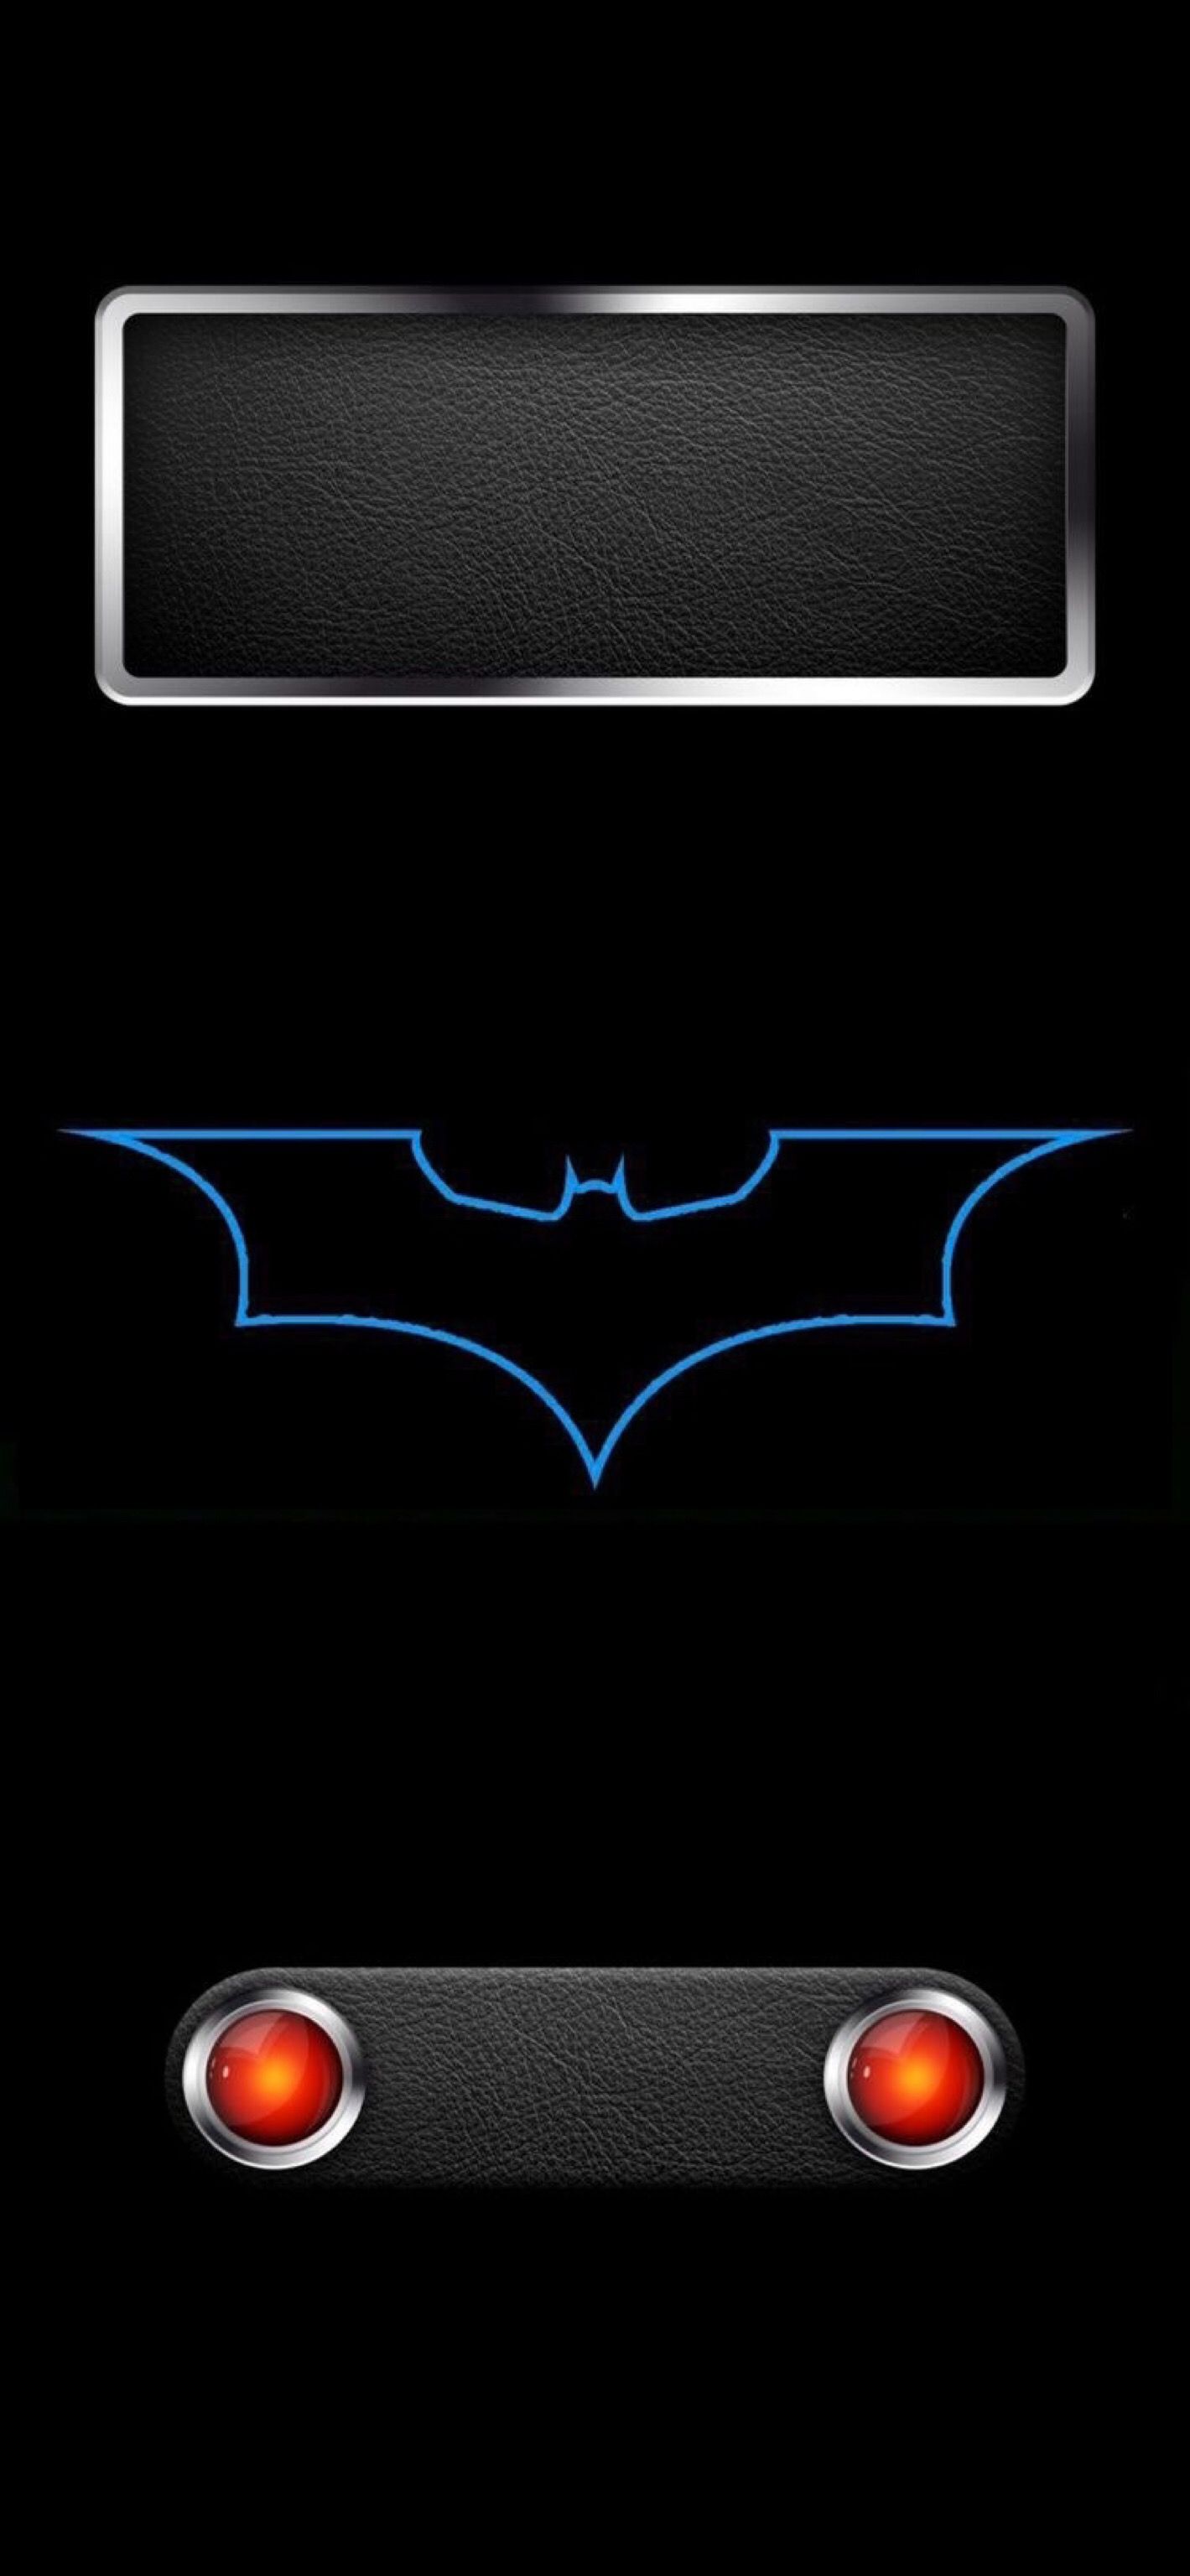 Batman wallpapers for your lockscreen 😈 : r/iphonewallpapers